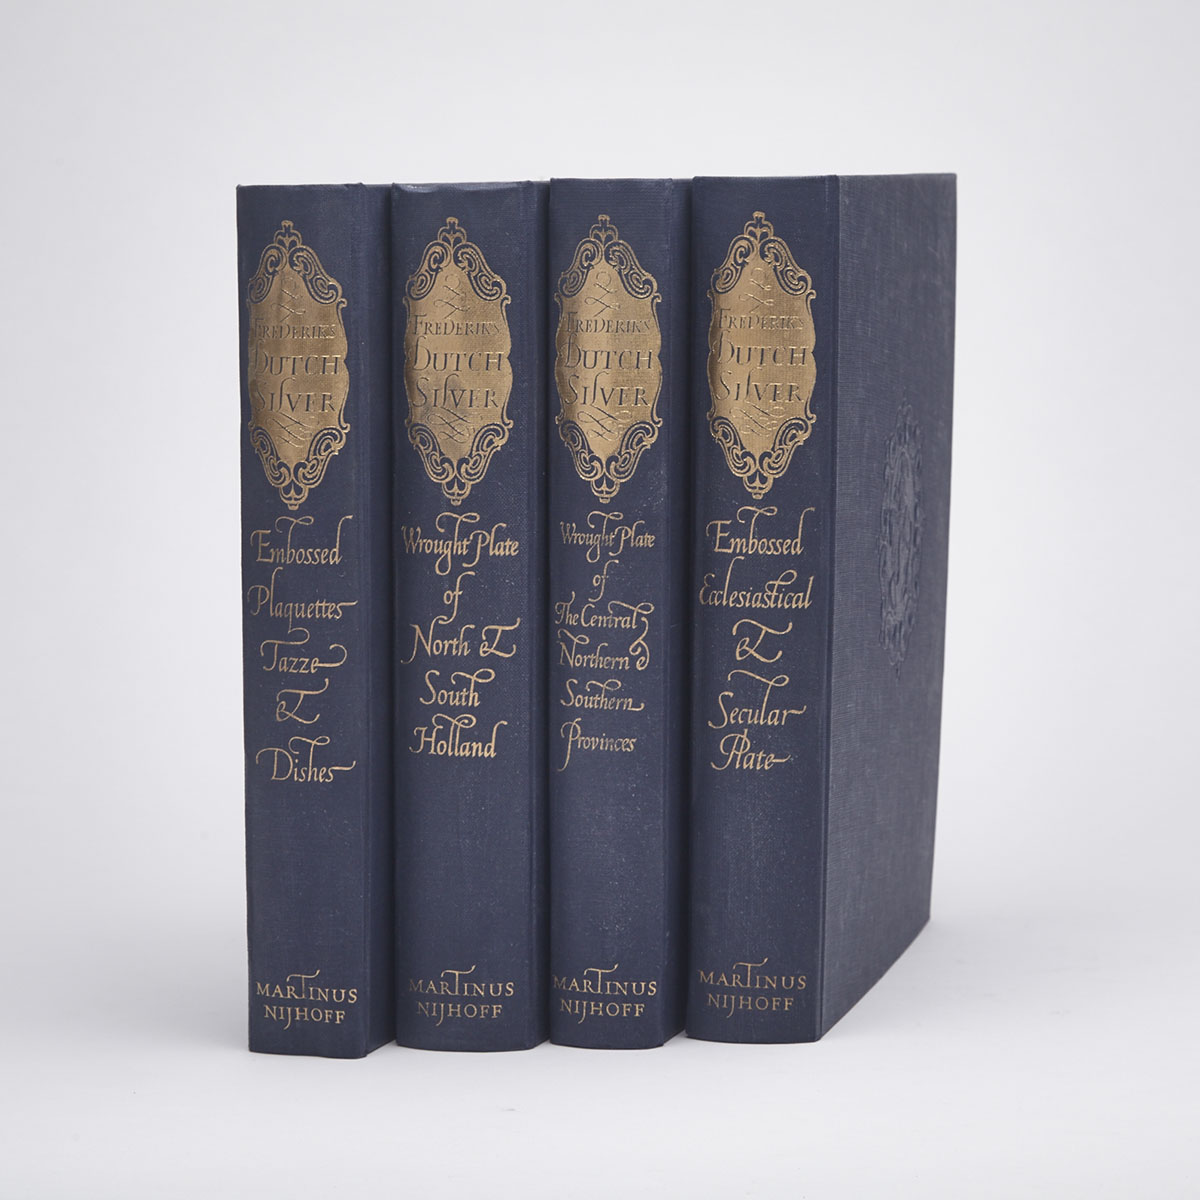 Frederiks, J.W., Dutch Silver, 4 volumes